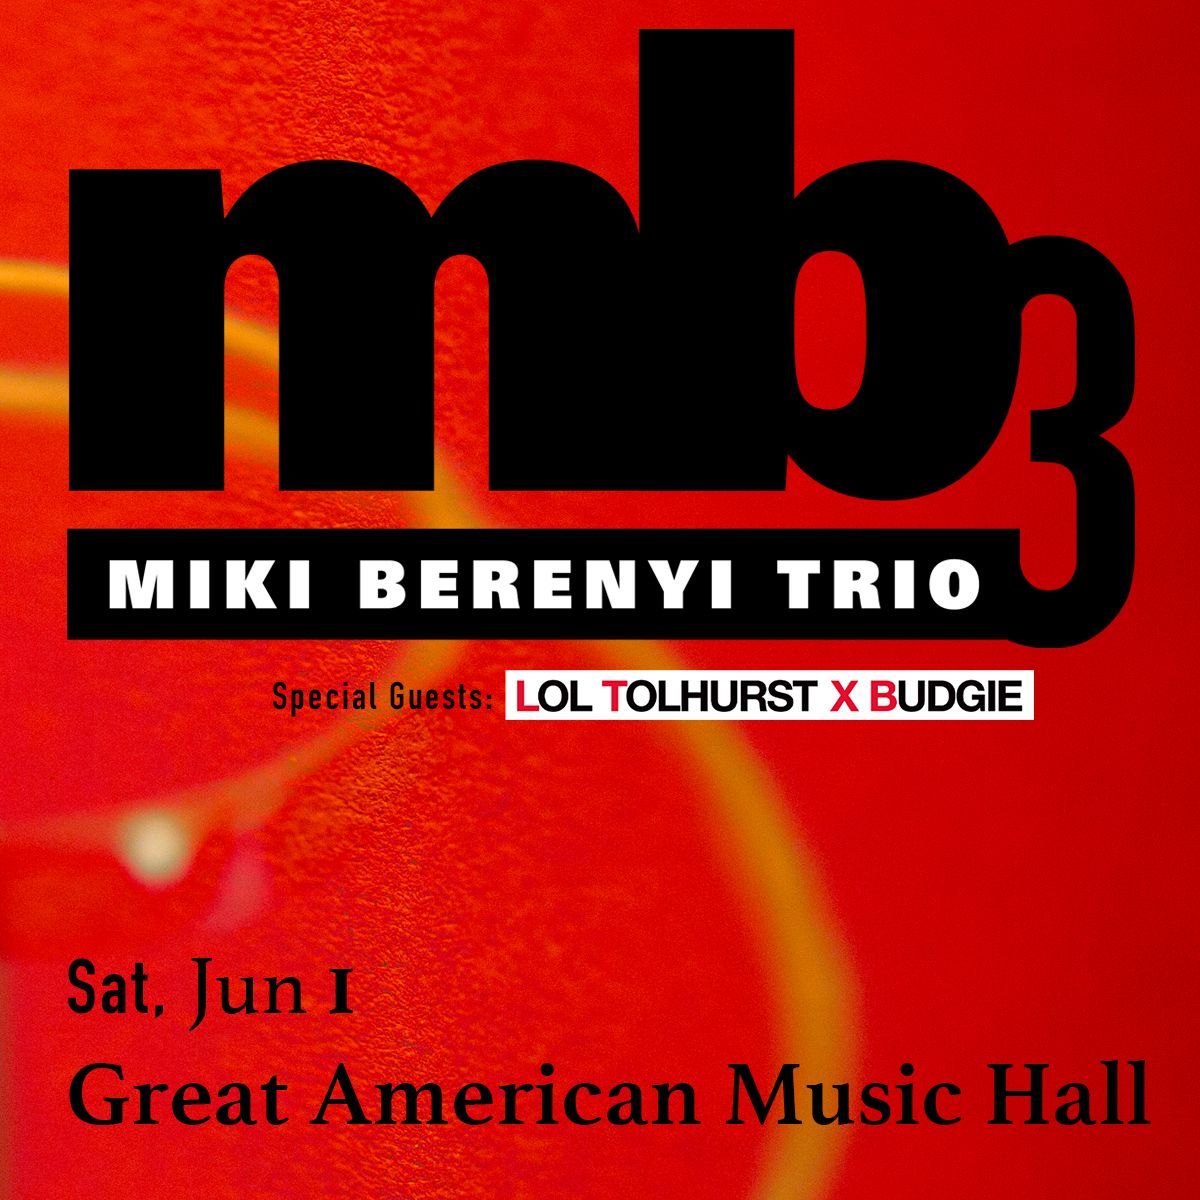 Miki Berenyi Trio